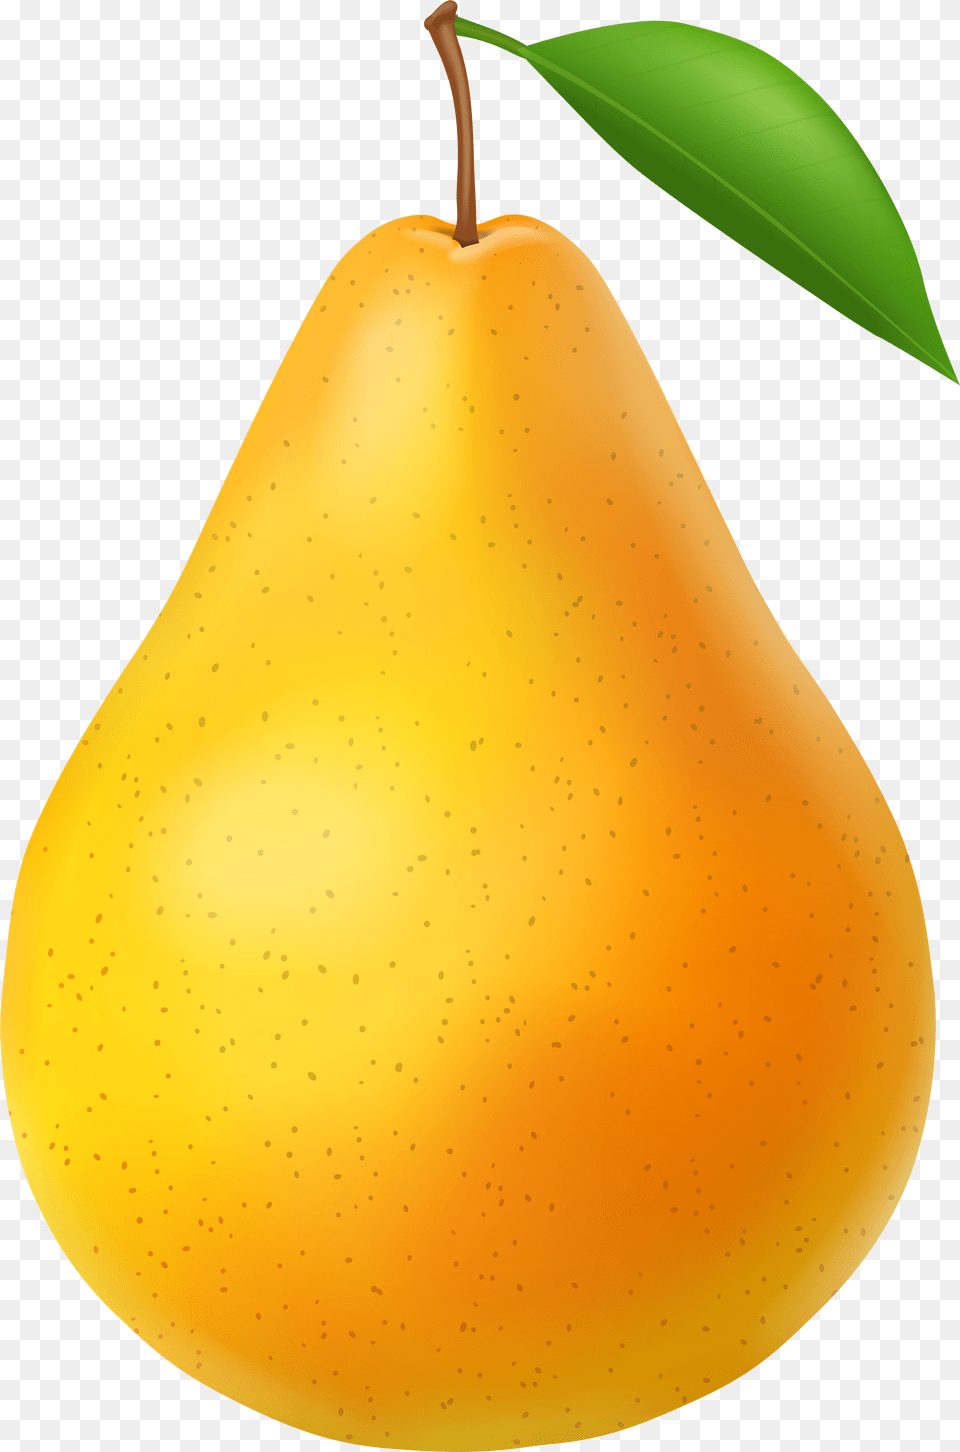 Pear Transparent Image Pear Transparent, Produce, Food, Fruit, Plant Png